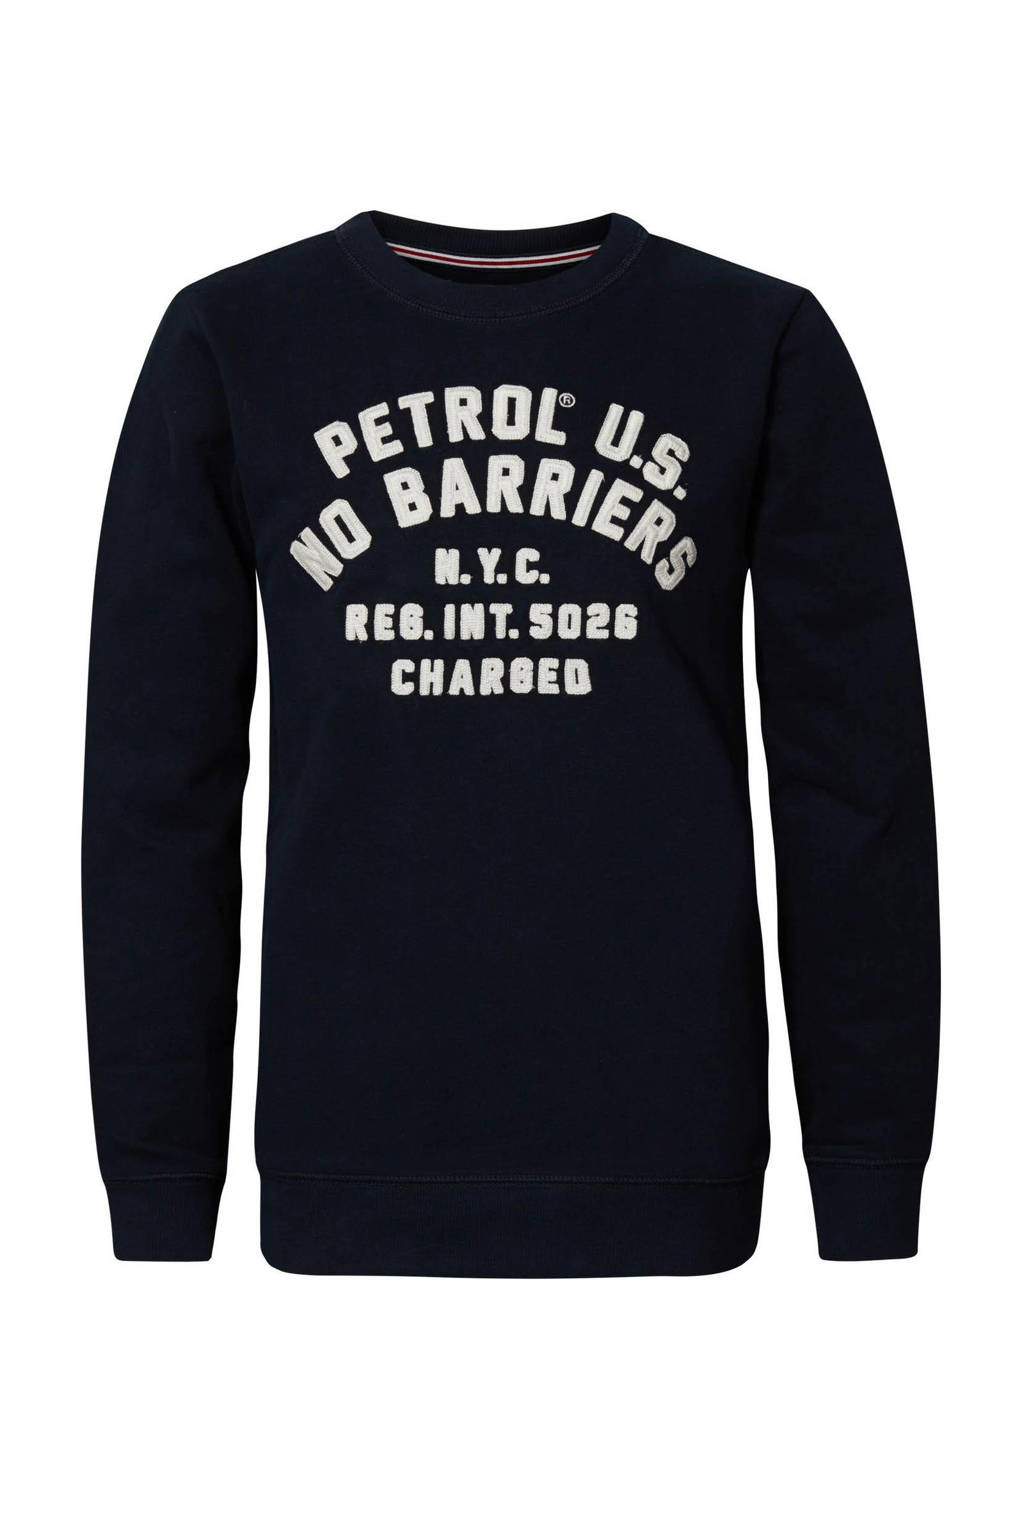 Donkerblauwe jongens Petrol Industries sweater met tekst print, lange mouwen en ronde hals